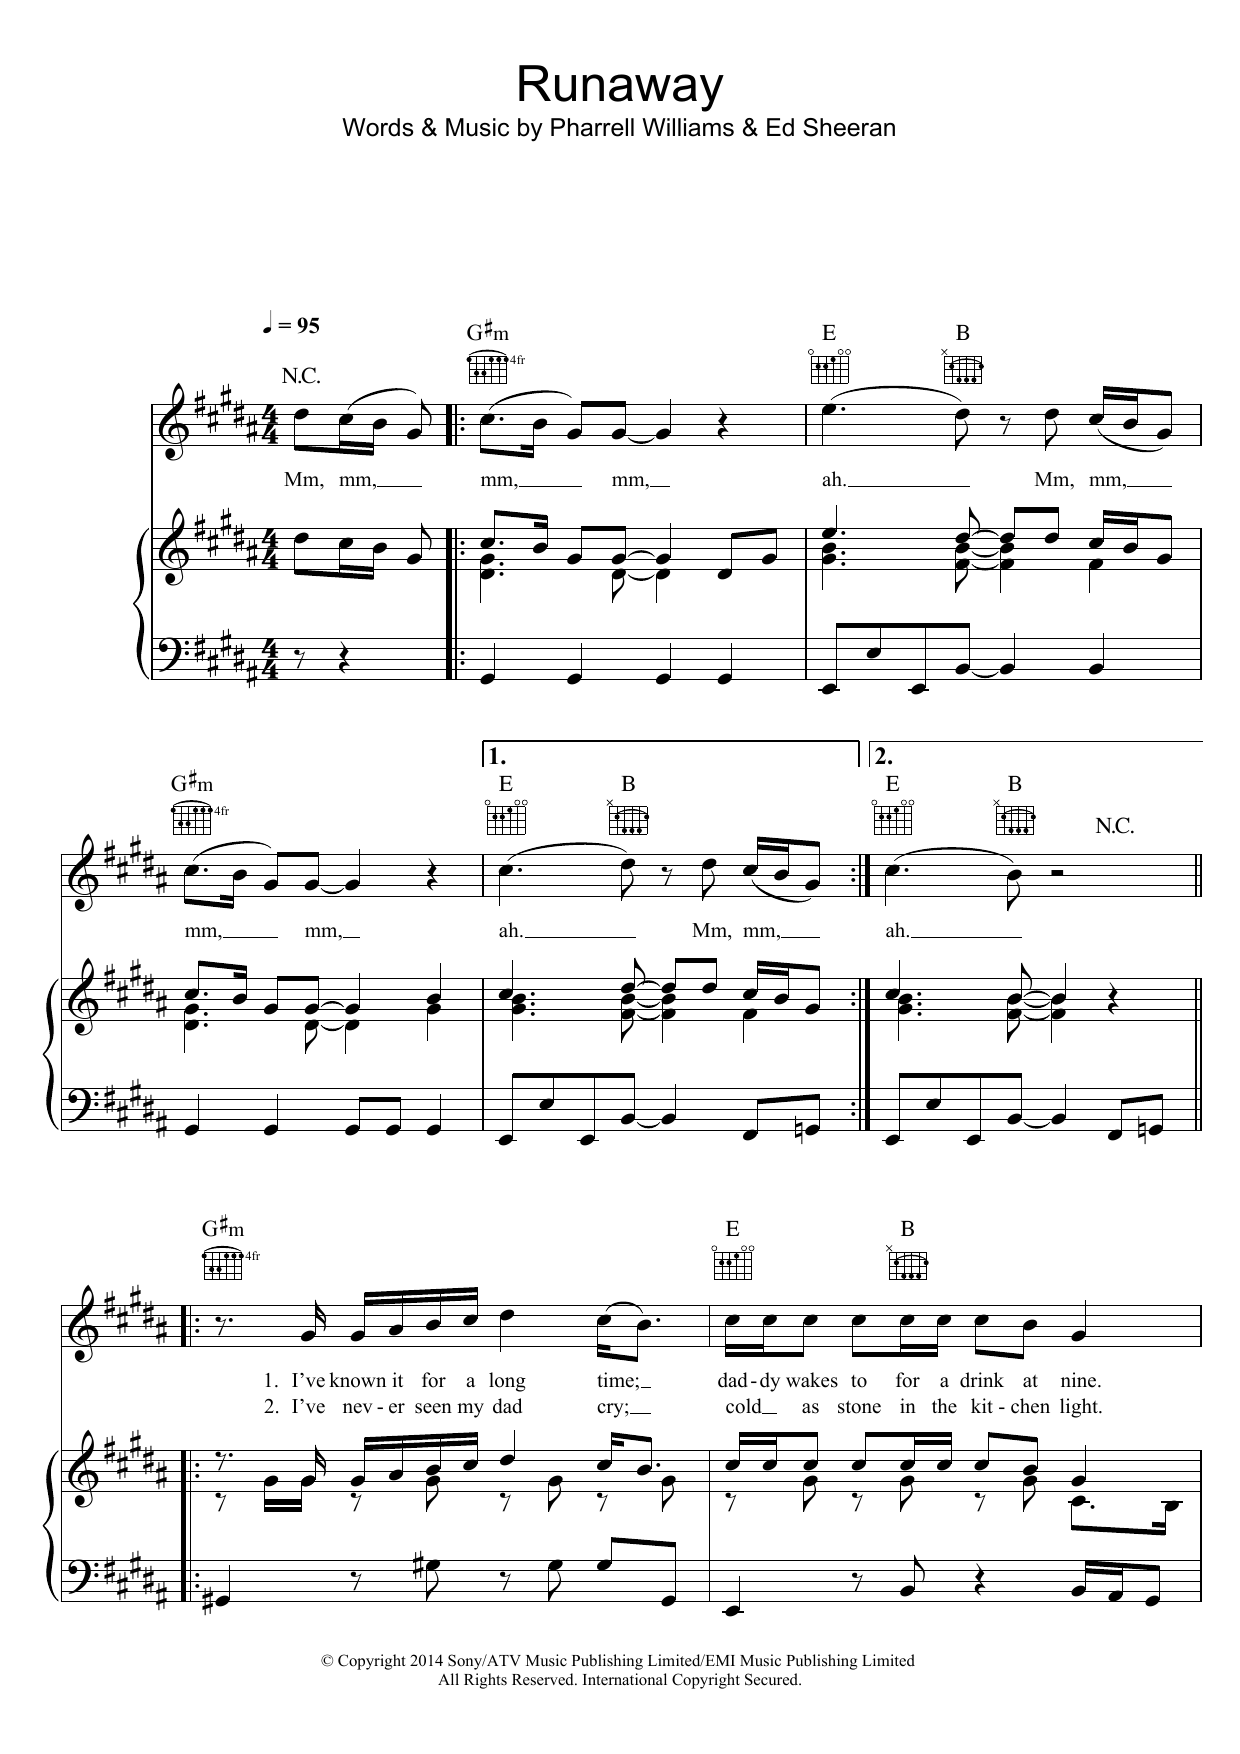 Ed Sheeran Runaway Sheet Music Notes & Chords for Piano, Vocal & Guitar (Right-Hand Melody) - Download or Print PDF